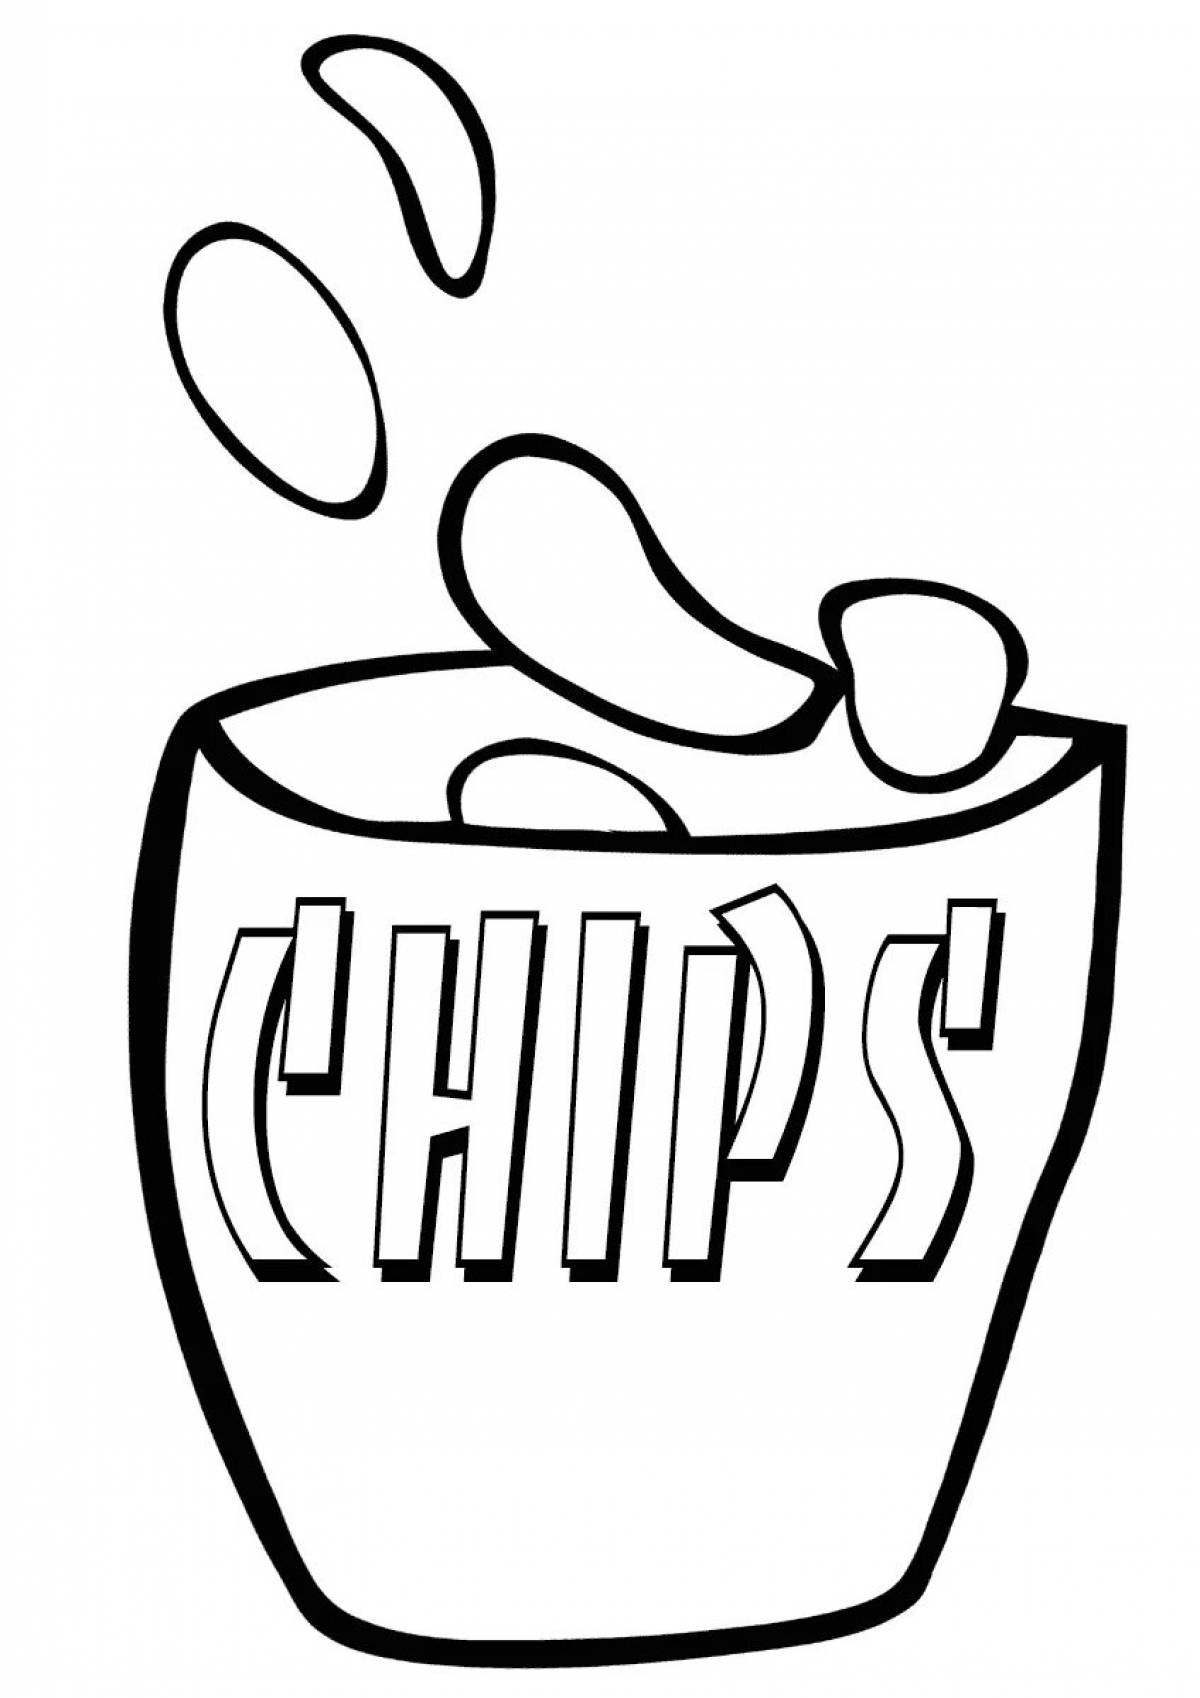 Chips for kids #16